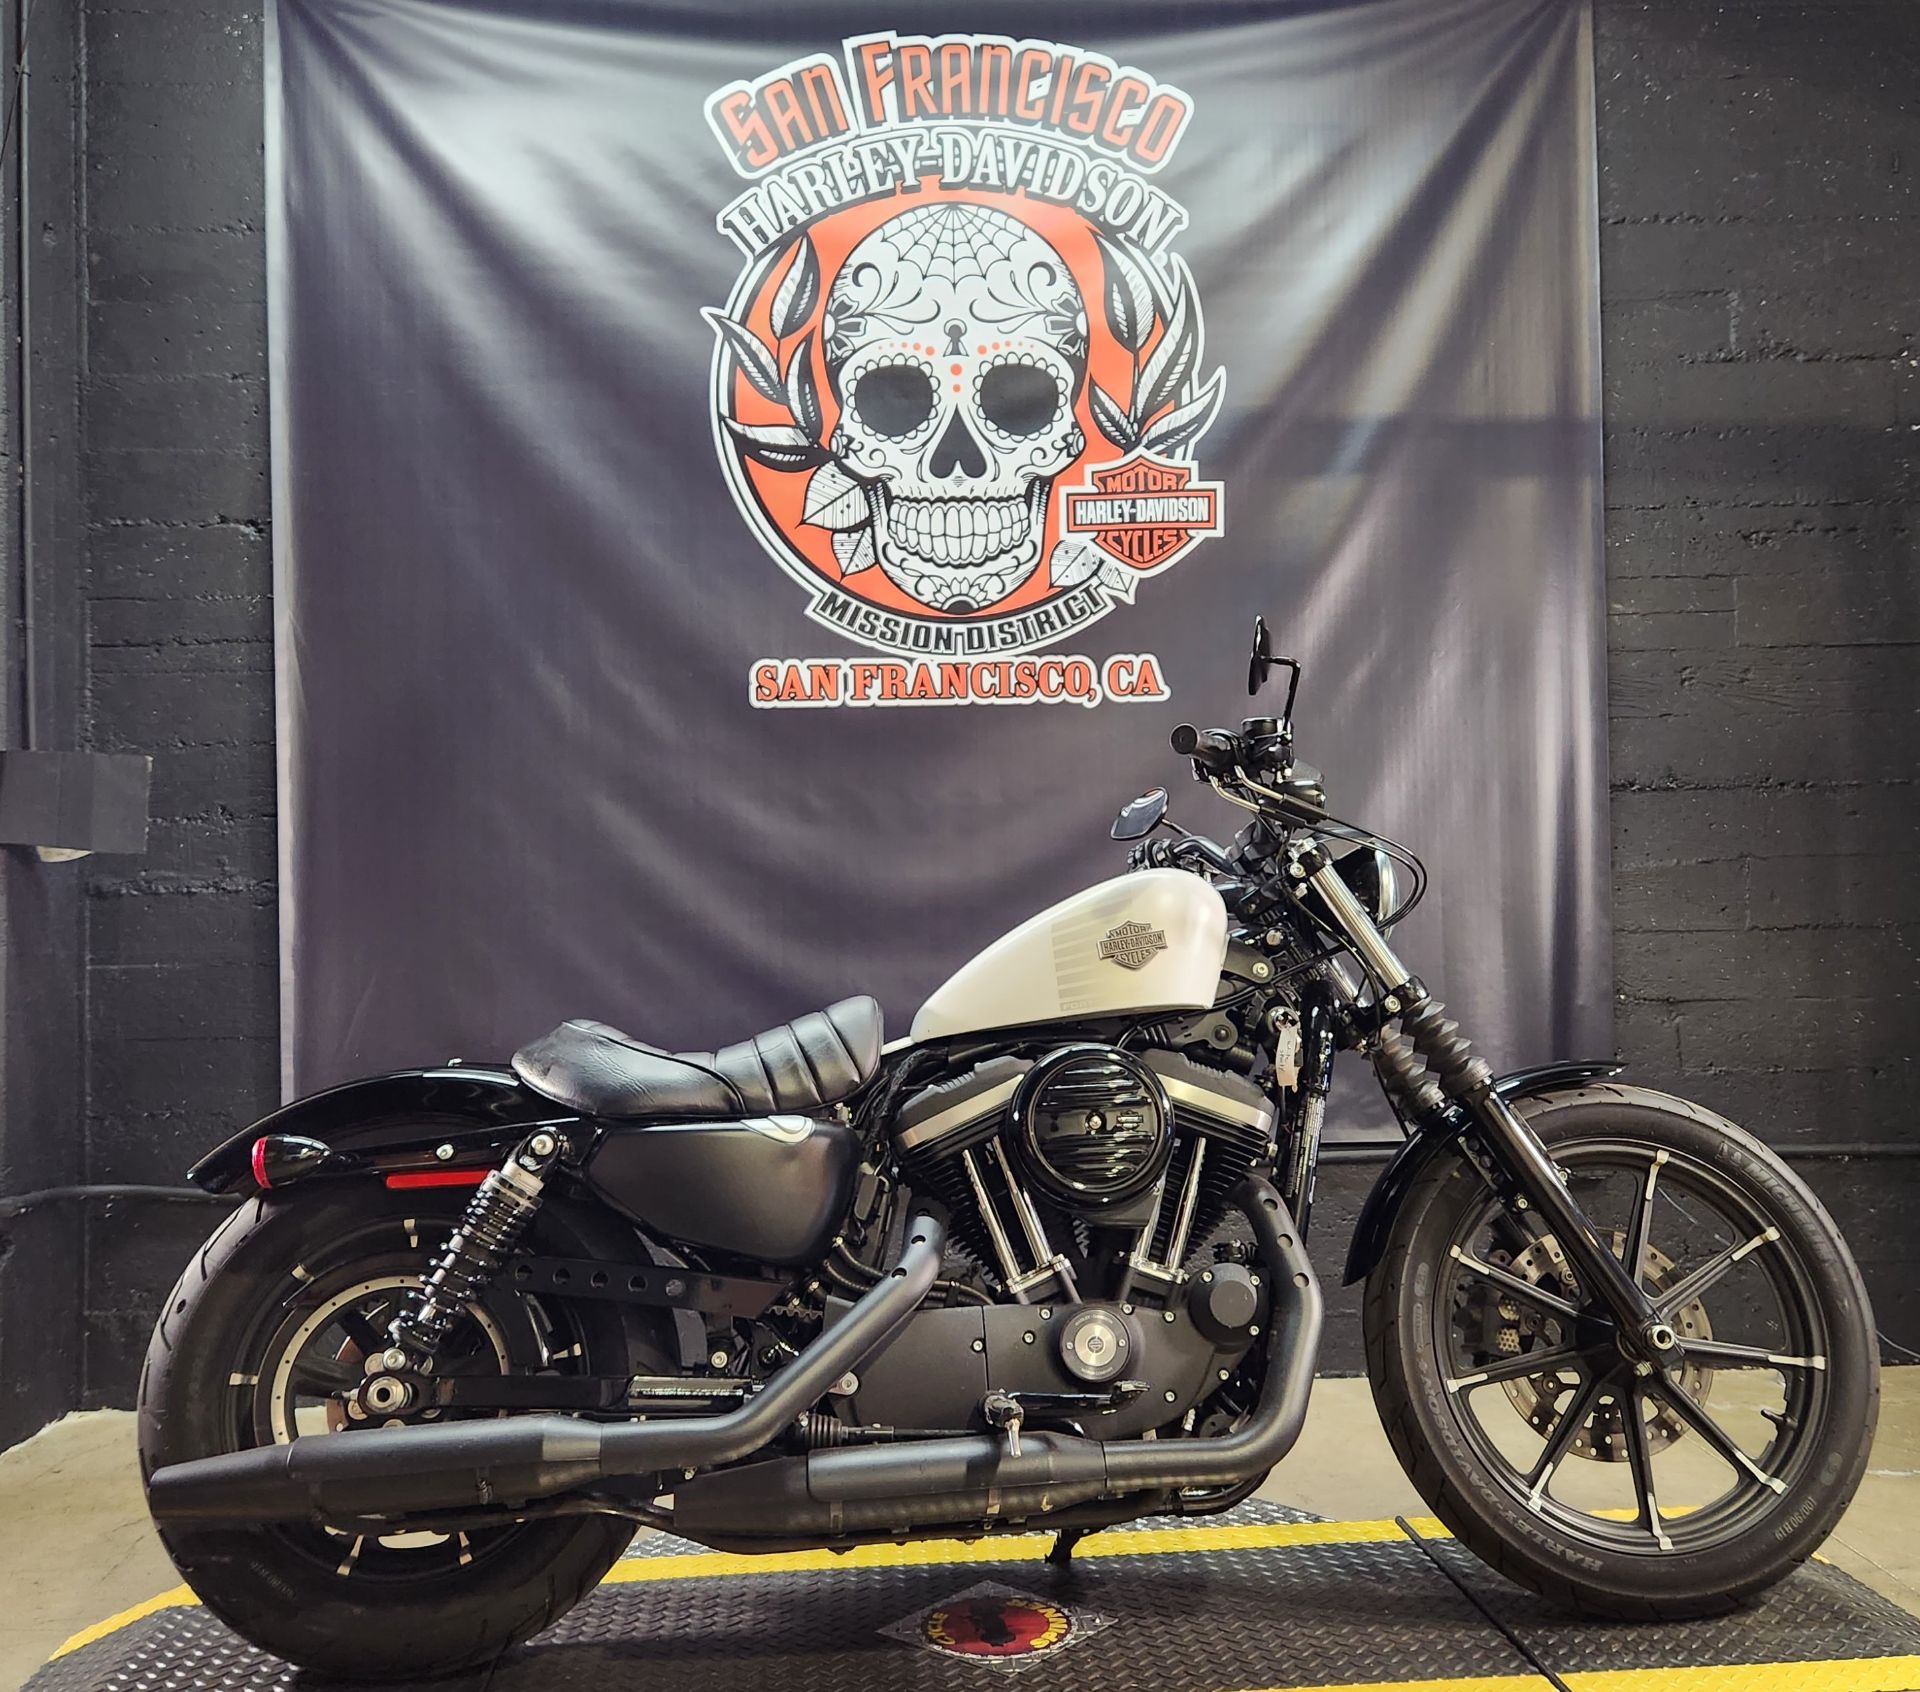 2020 Harley-Davidson Iron 883™ in San Francisco, California - Photo 1